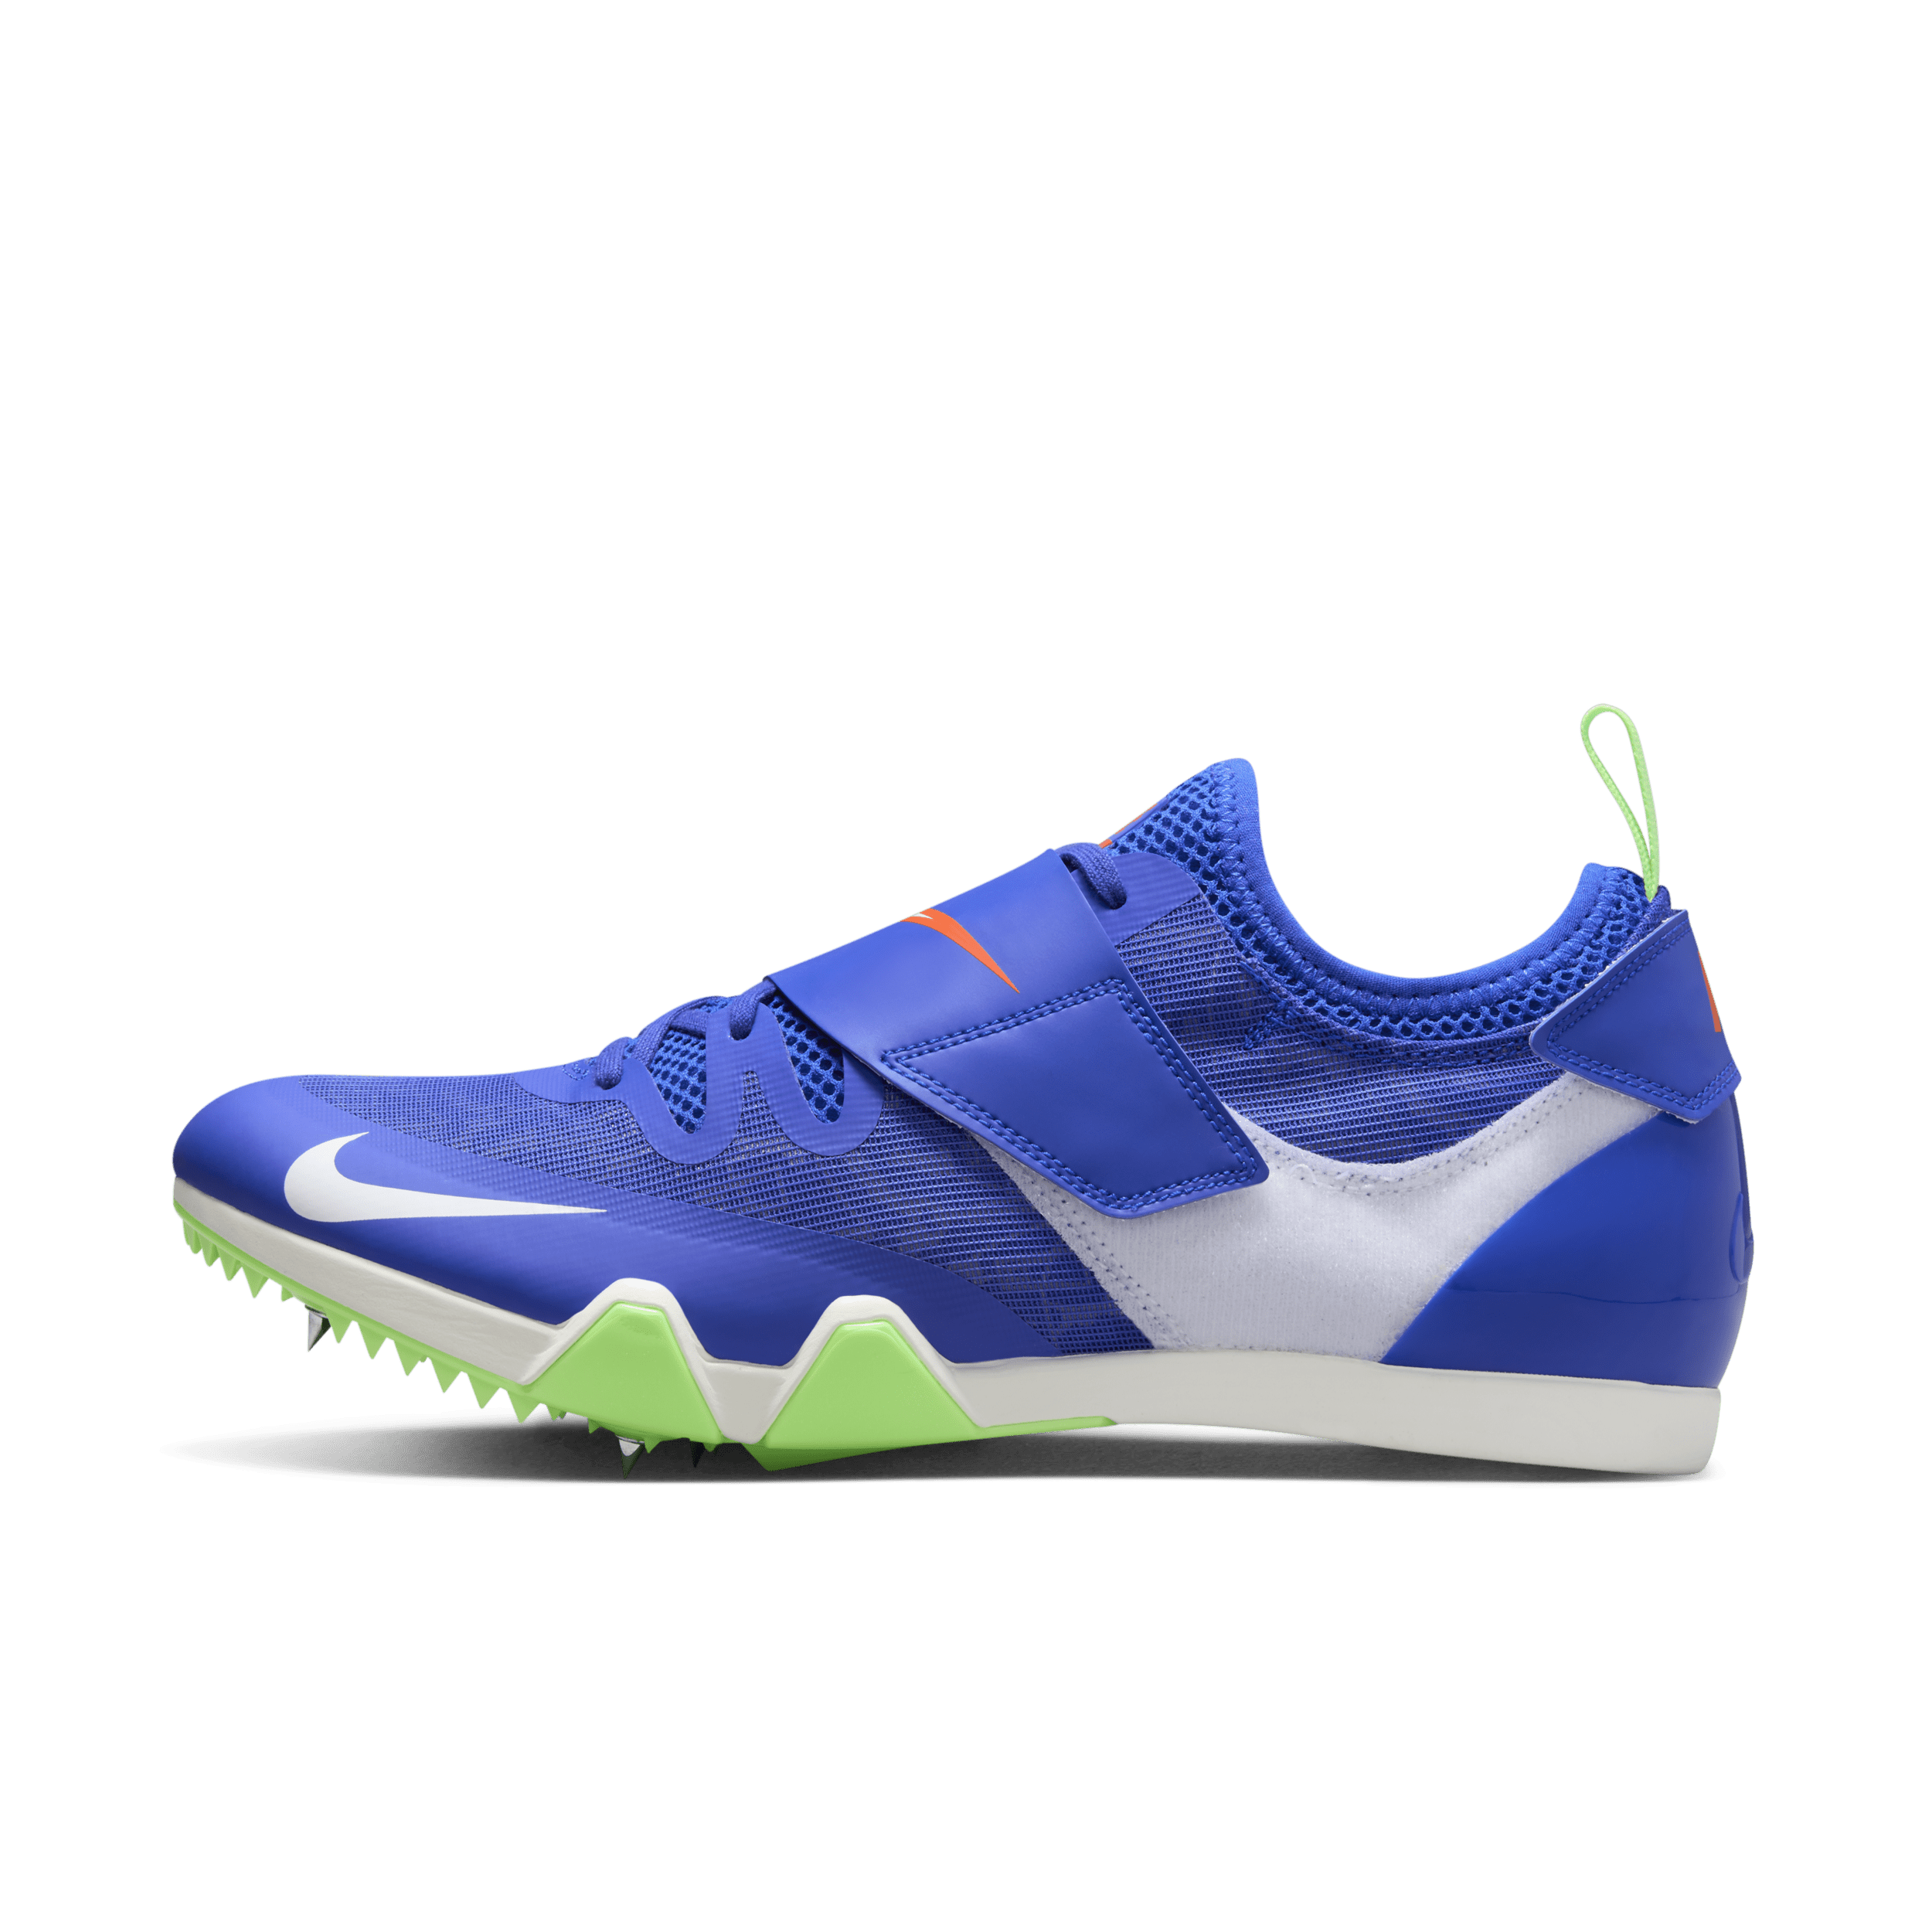 Scarpa chiodata per il salto Nike Pole Vault Elite - Blu